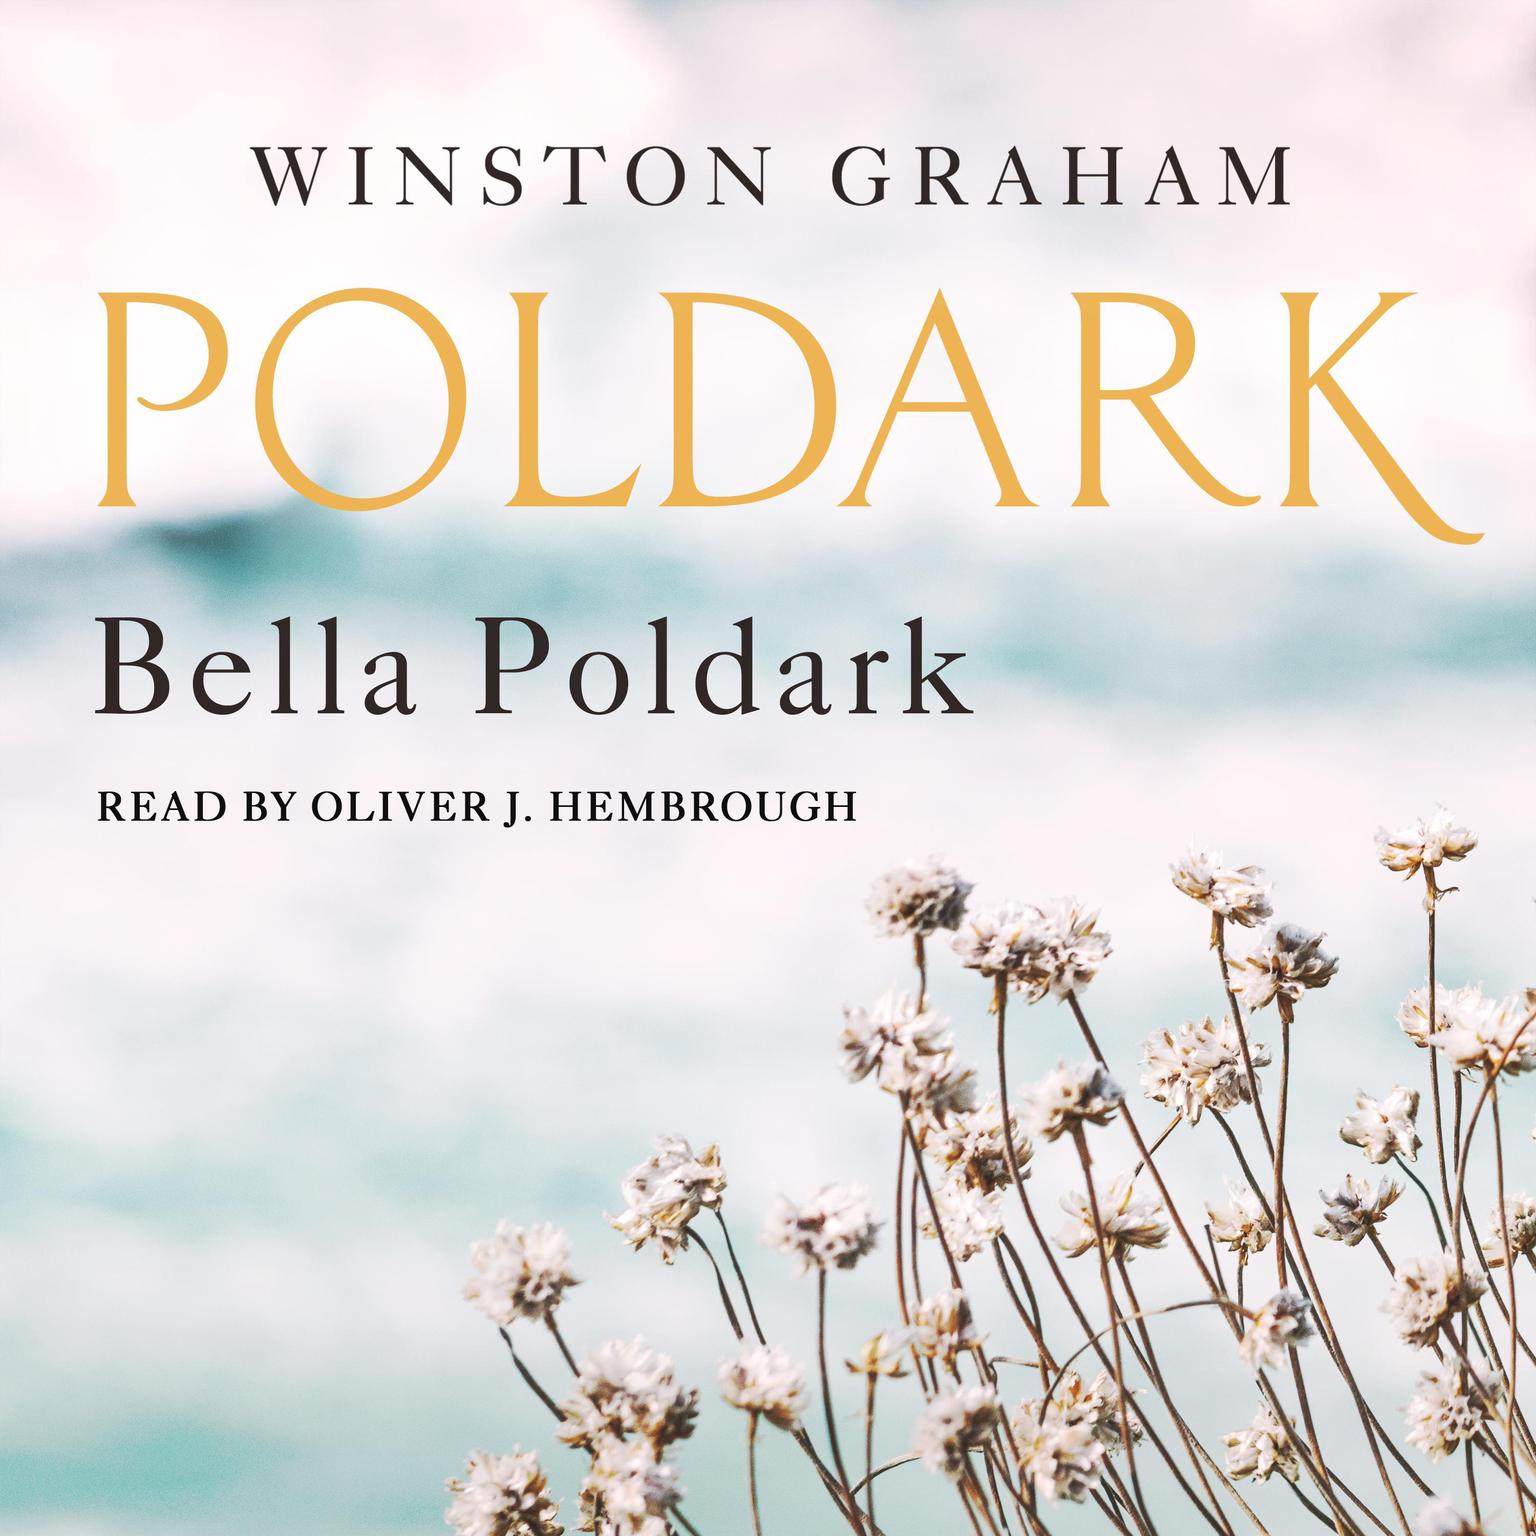 Bella Poldark: A Novel of Cornwall, 1818-1820 Audiobook, by Winston Graham